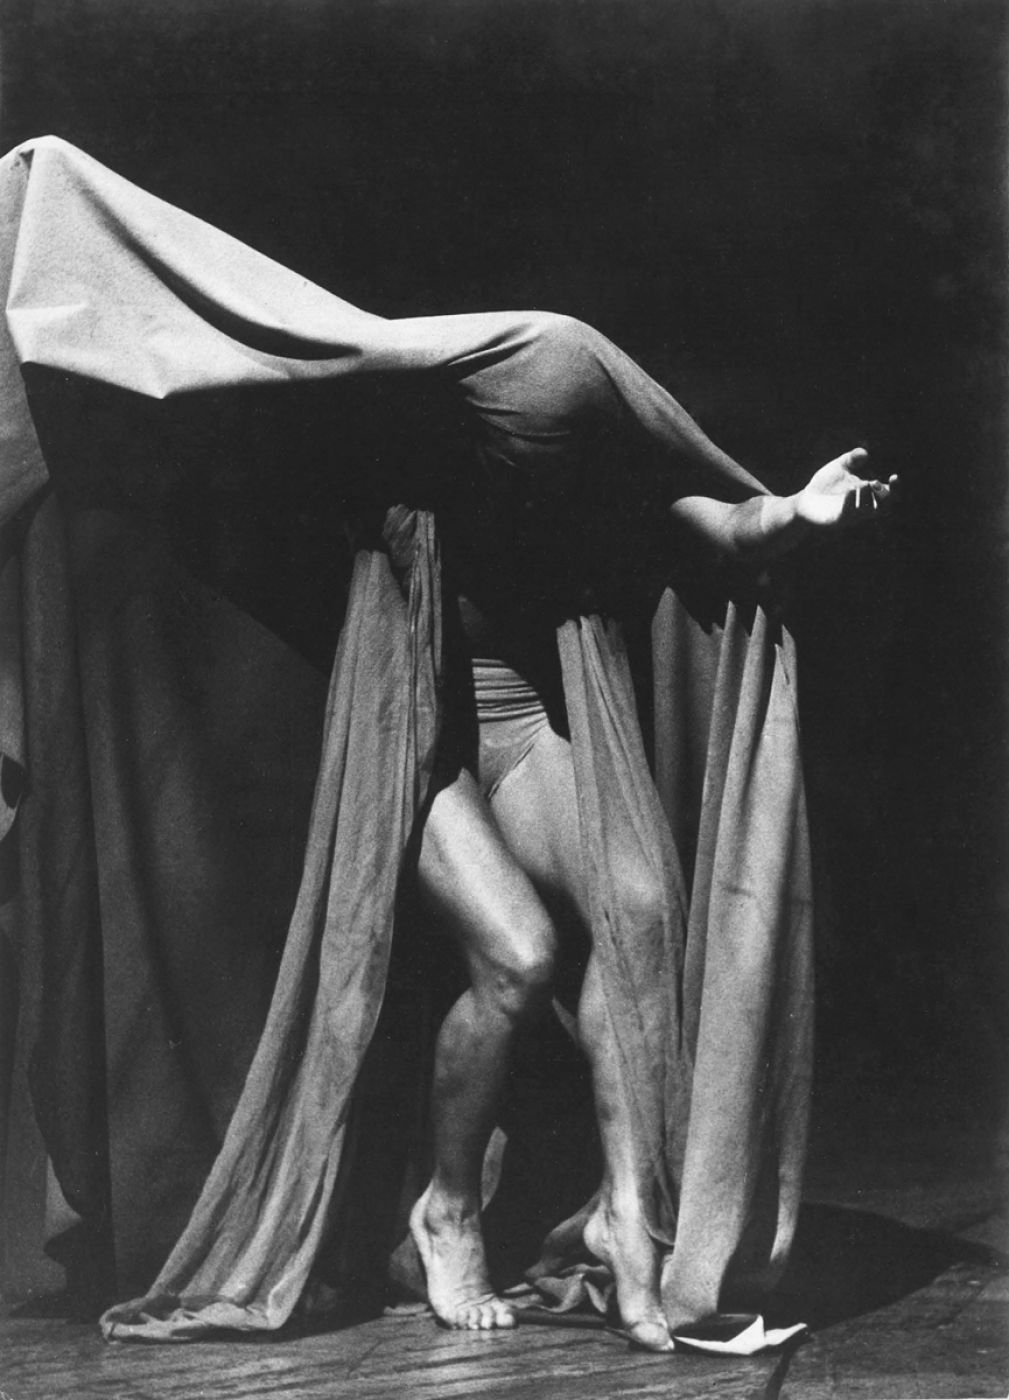 Sara Facio, “Untitled”, 1960 ca.